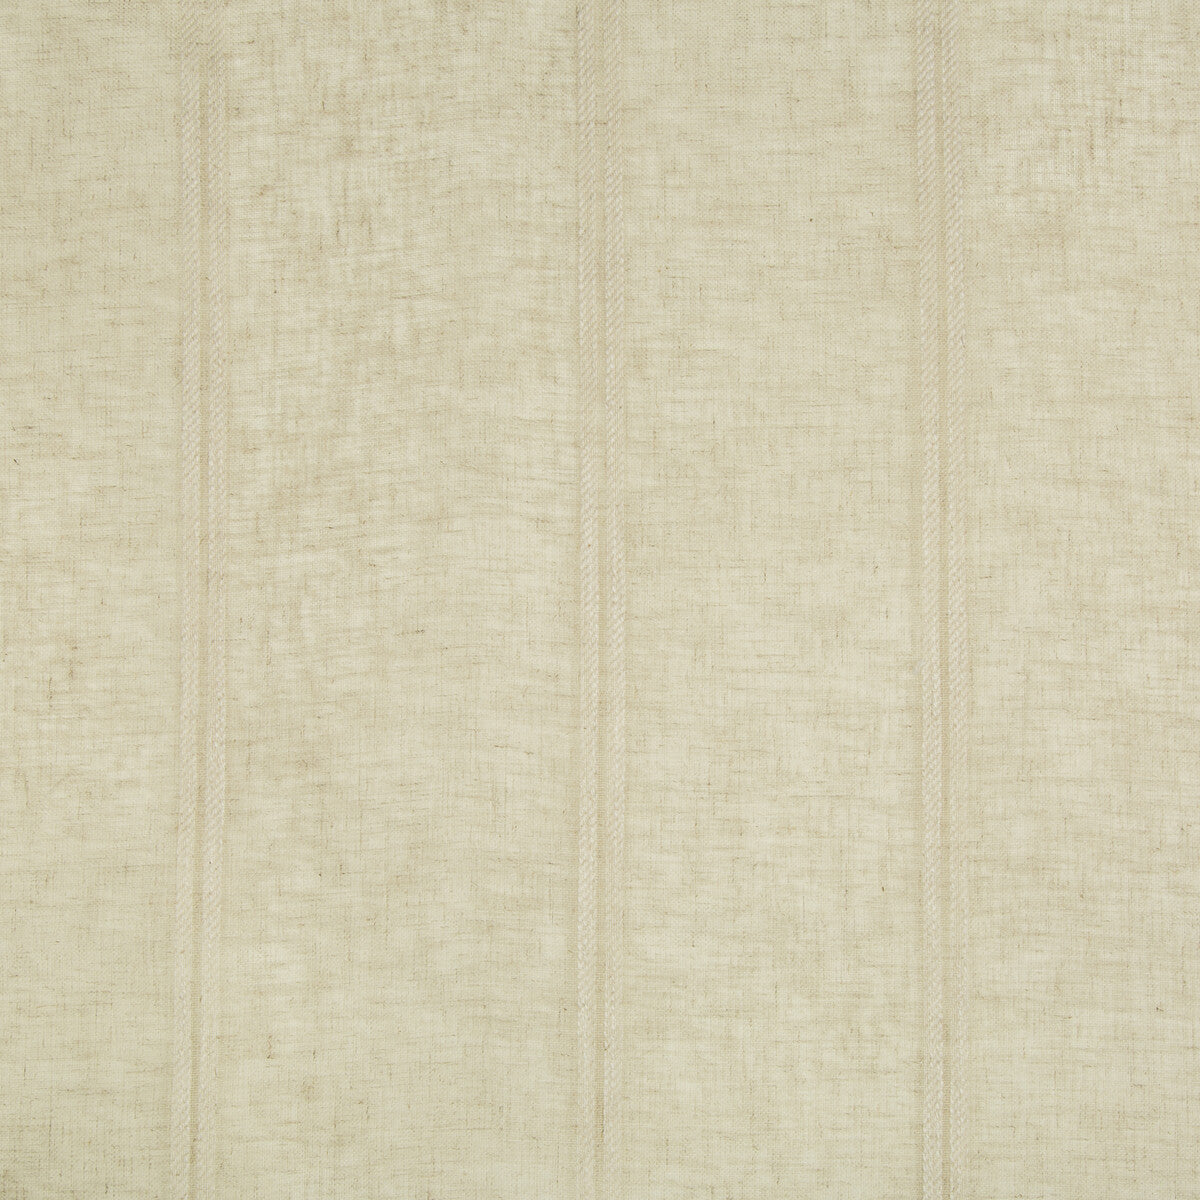 Kravet Basics fabric in 4267-16 color - pattern 4267.16.0 - by Kravet Basics in the Gis collection